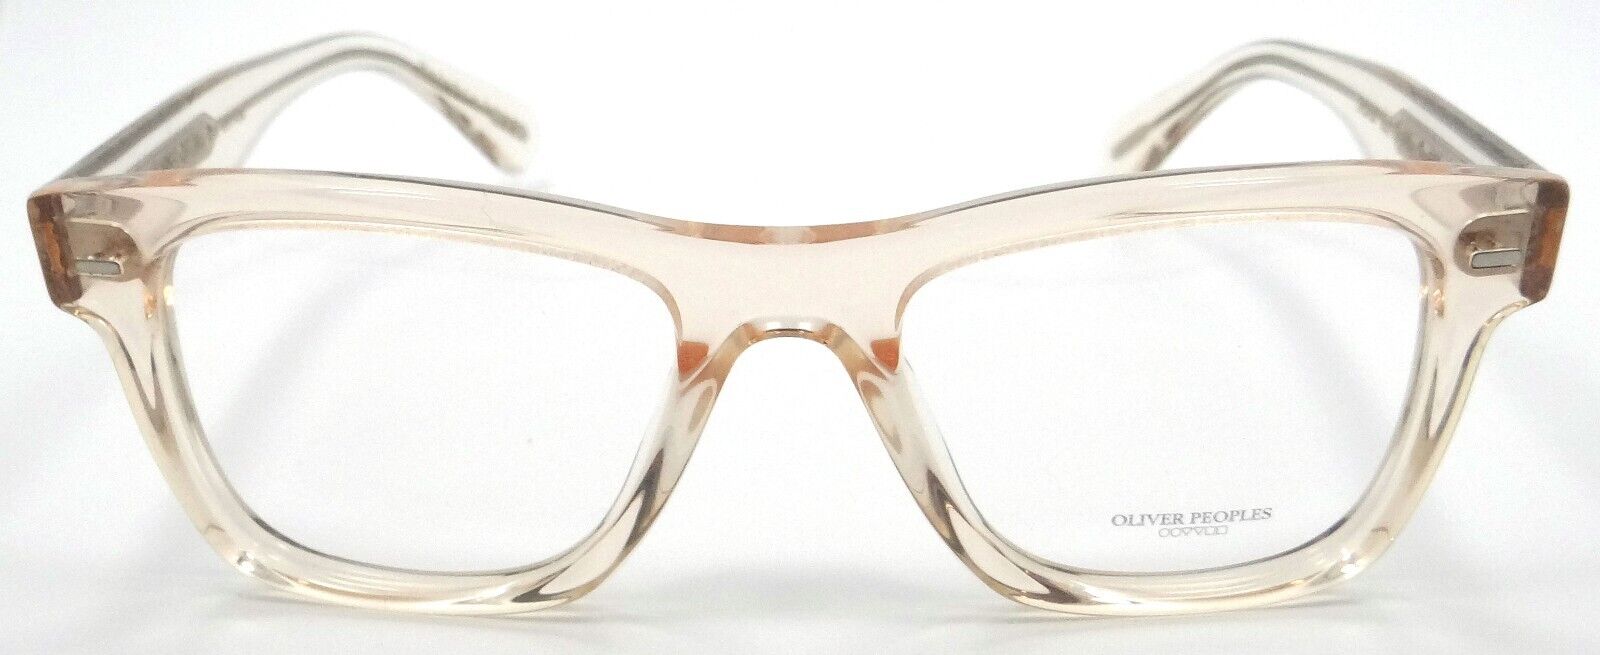 Oliver Peoples Eyeglasses Frames OV 5393U 1652 51-19-145 Oliver Light Silk Italy-827934428041-classypw.com-2